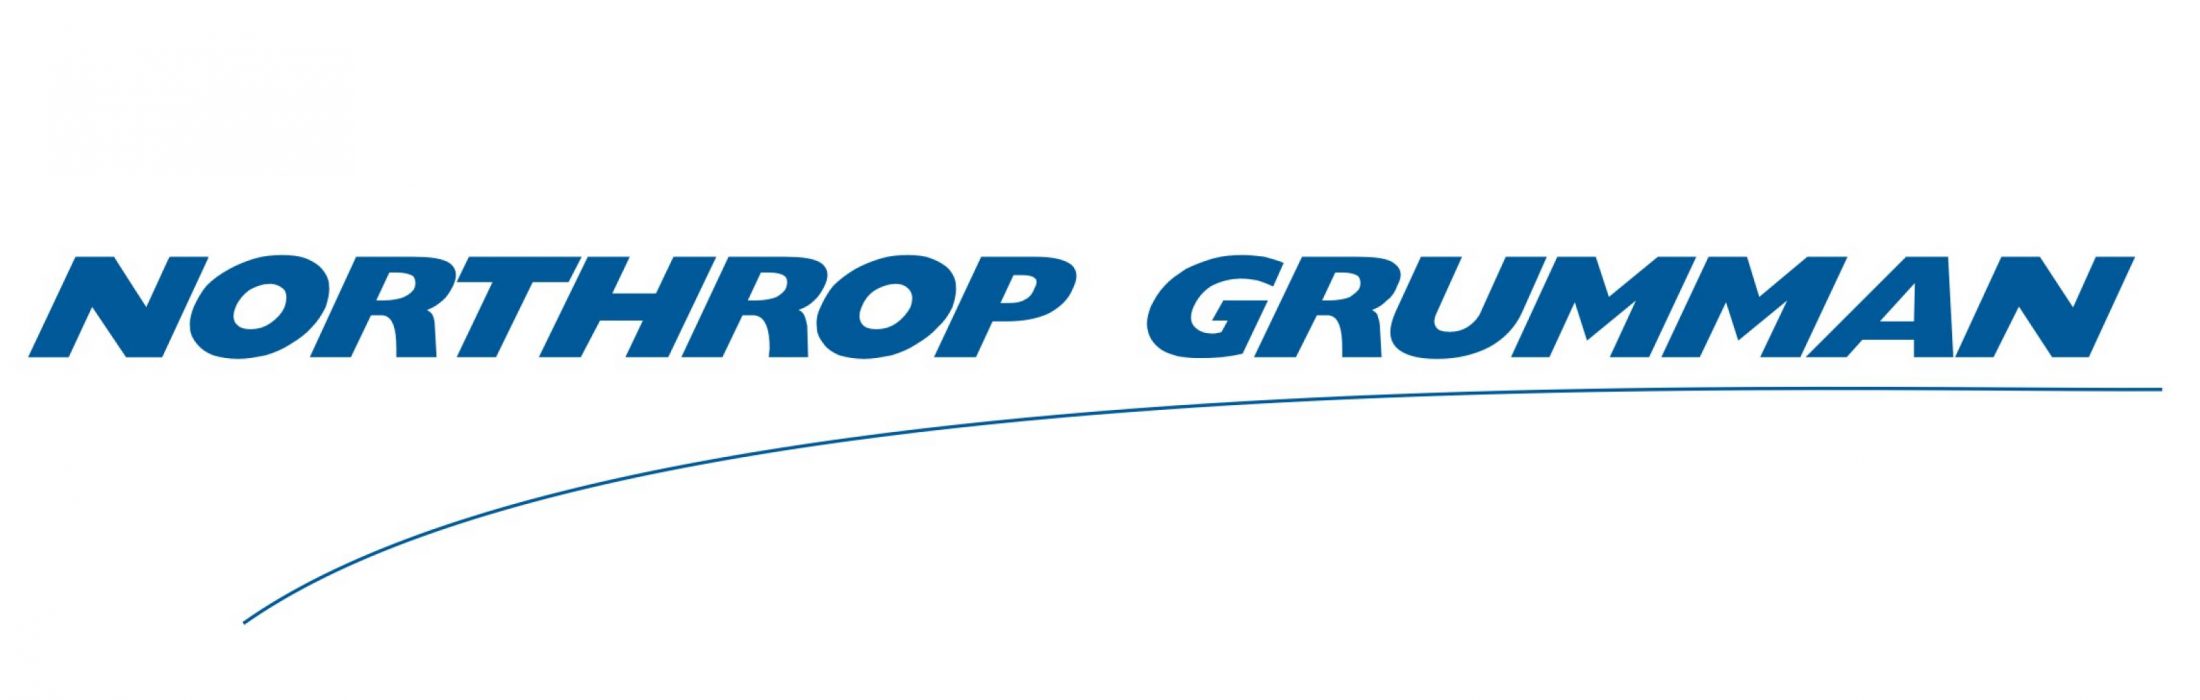 northrop_grumman-logo